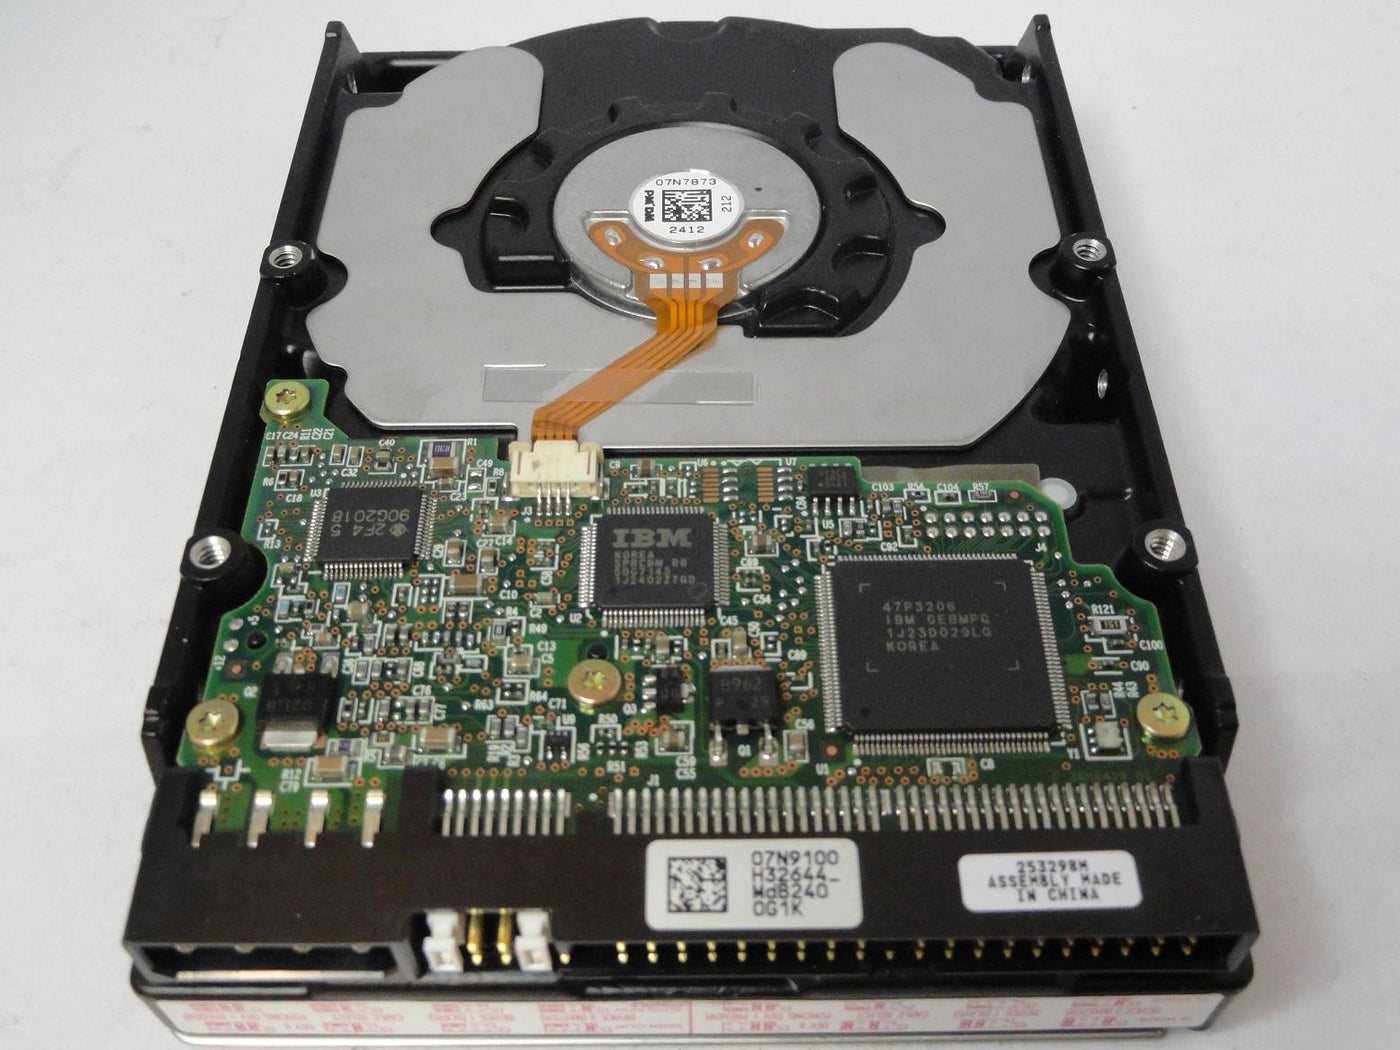 PR00145_07N9210_IBM 82.3GB IDE 7200rpm 3.5in HDD - Image2